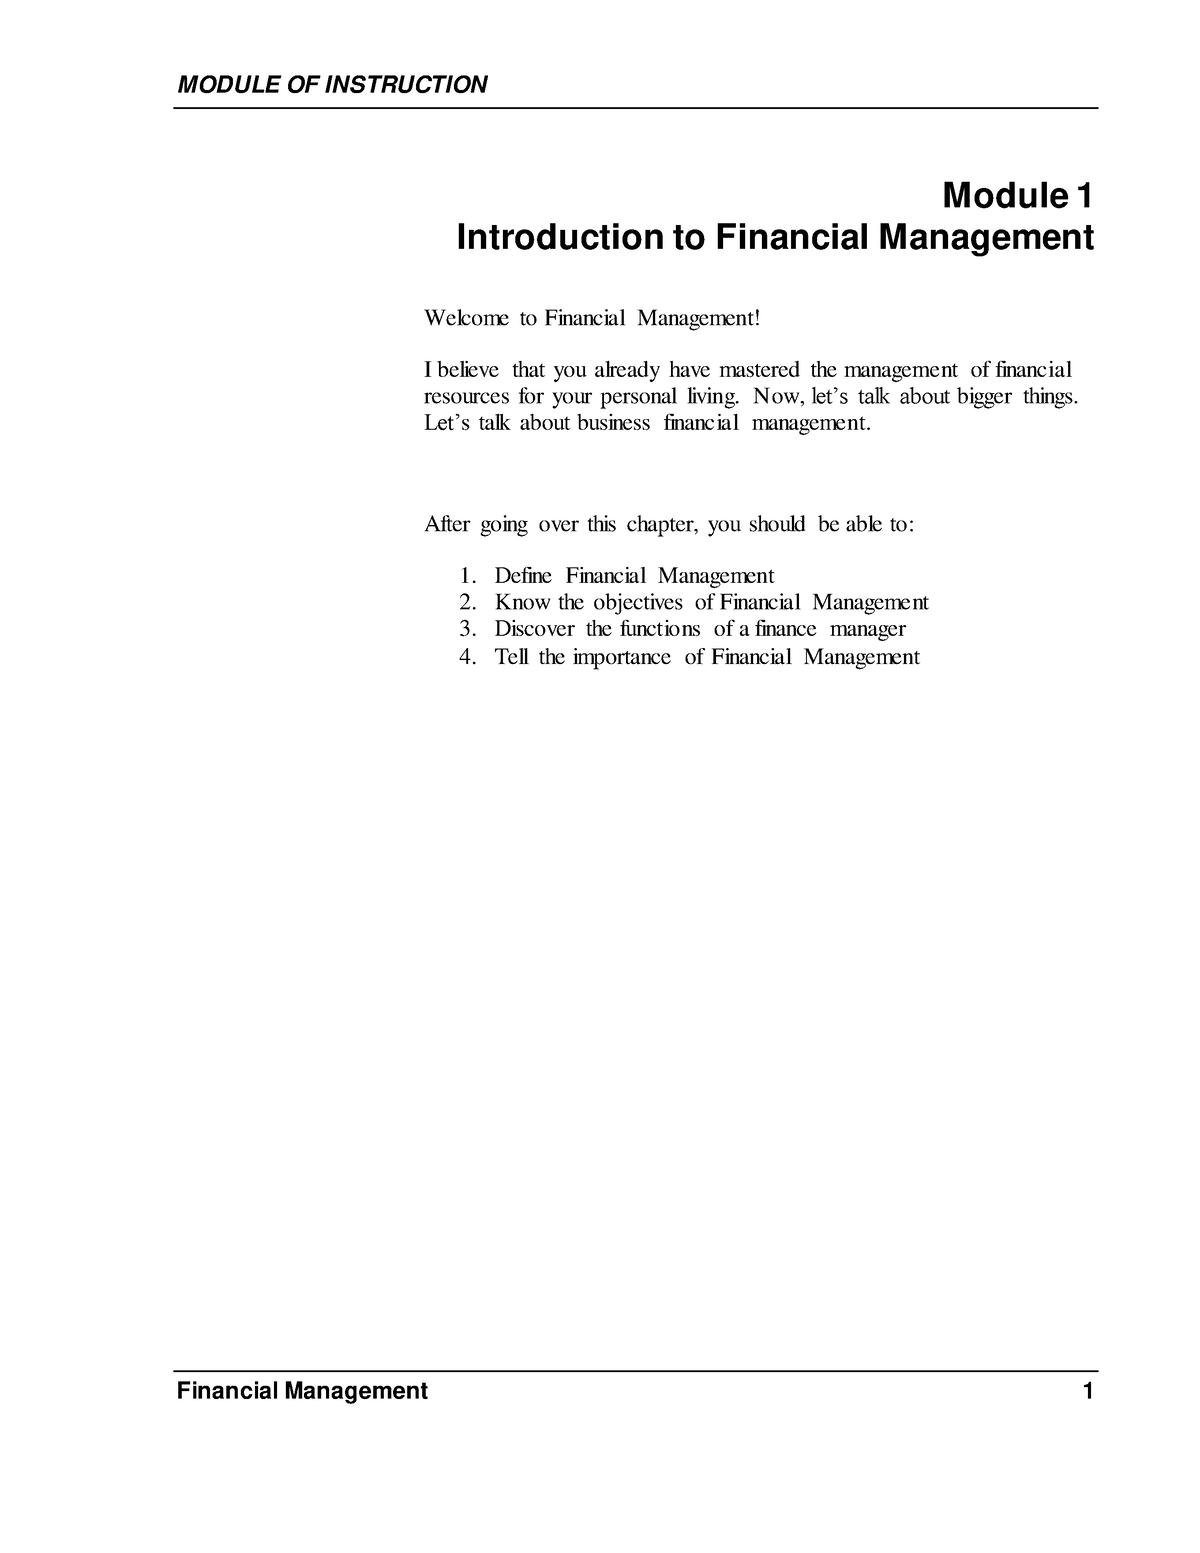 module 3 assignment 1 financial management case study